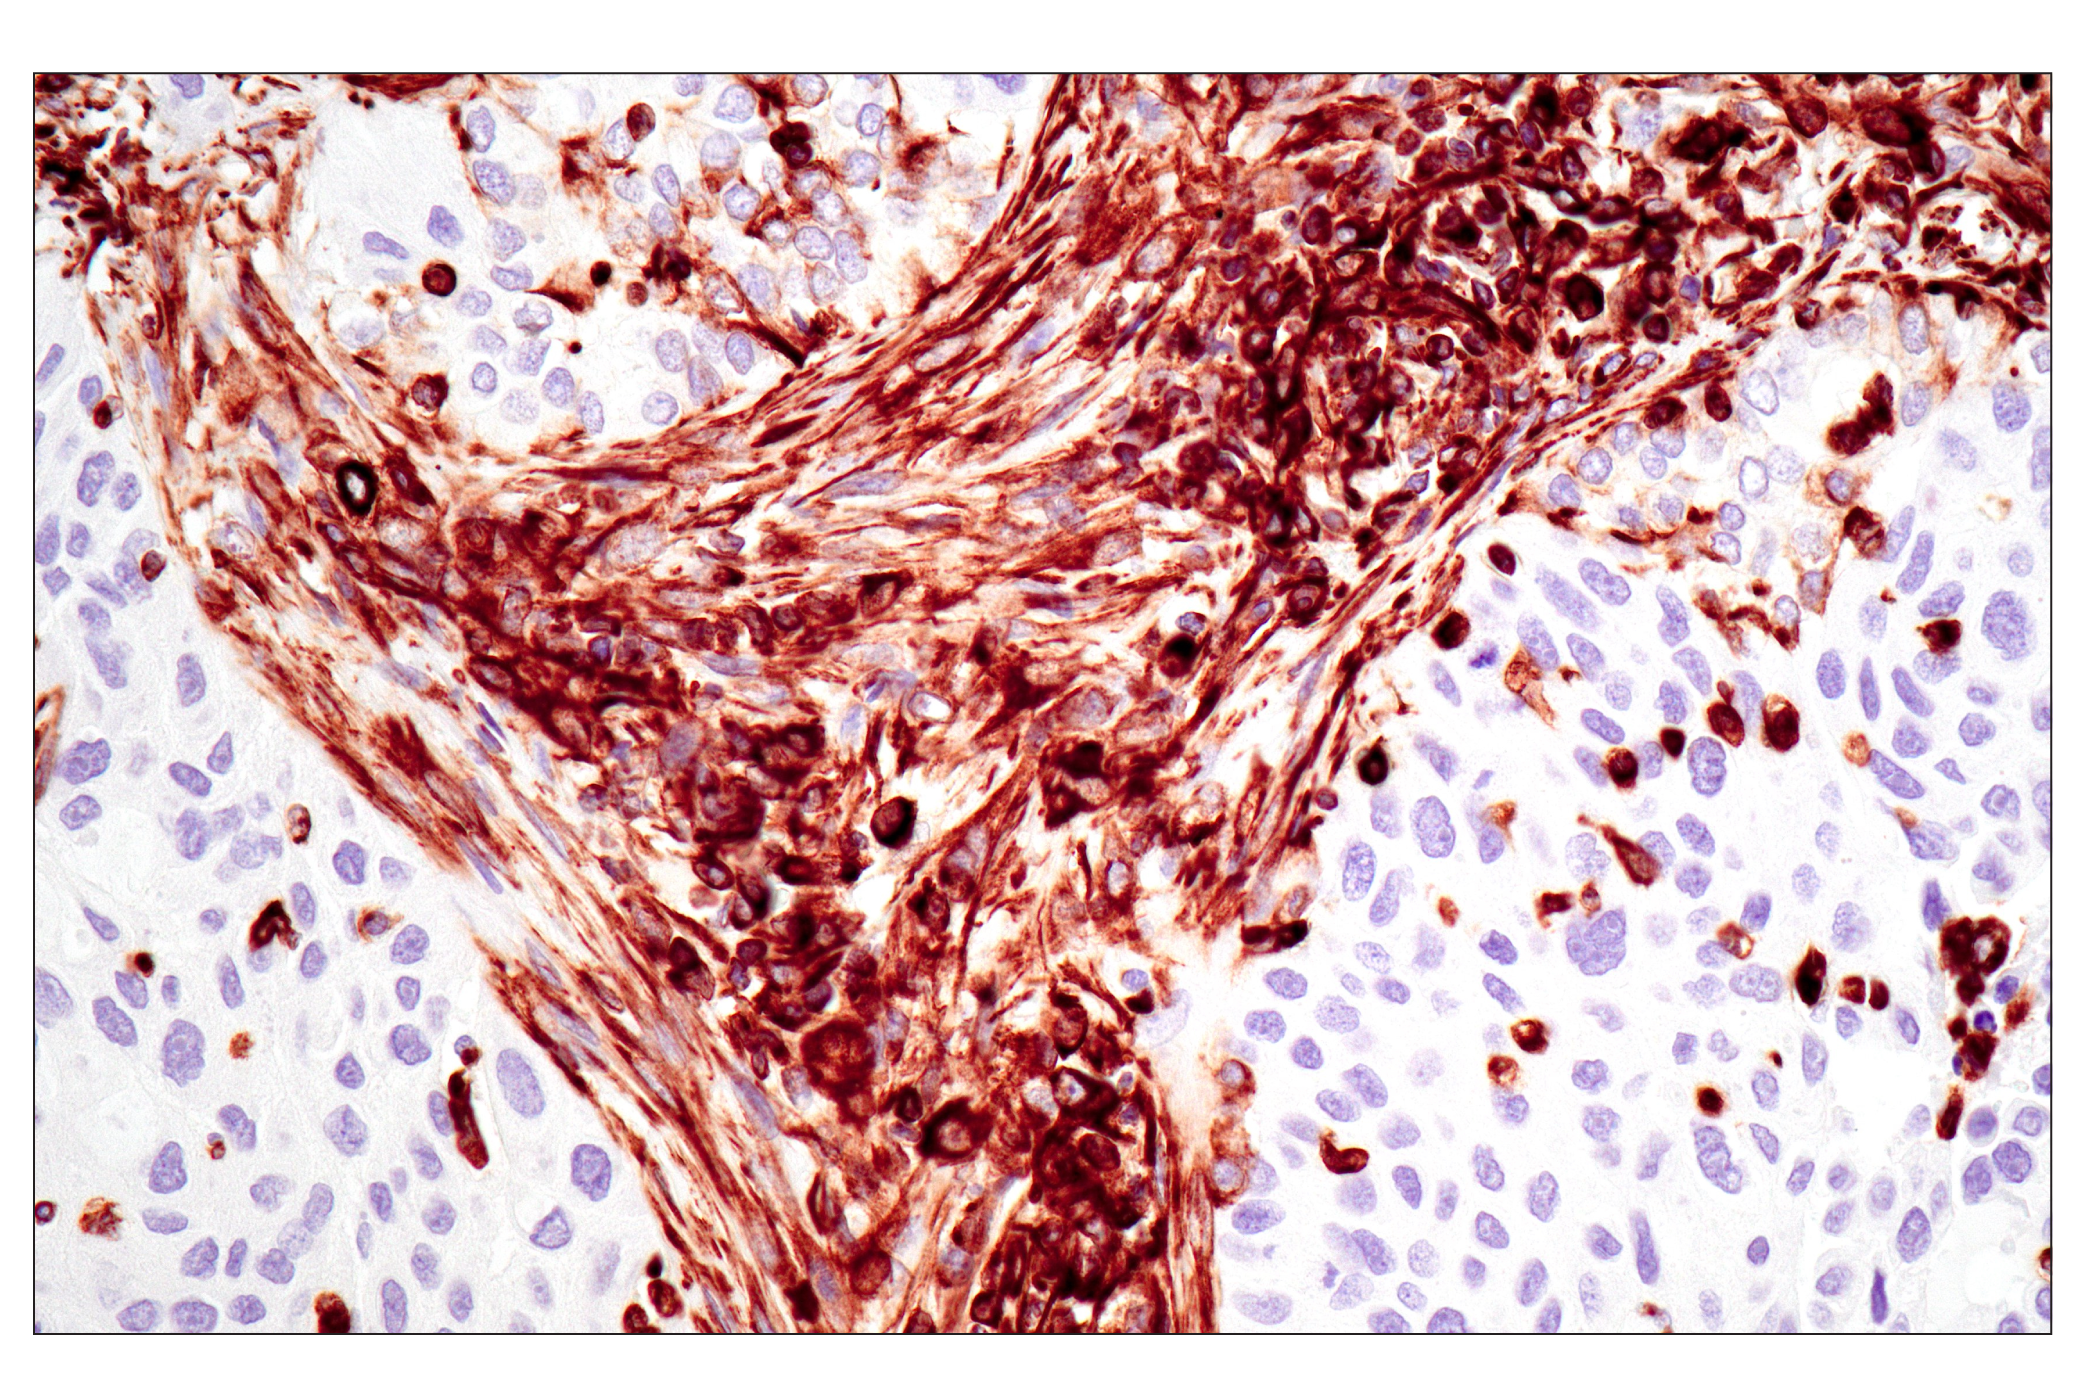  Image 25: Epithelial-Mesenchymal Transition (EMT) IF Antibody Sampler Kit